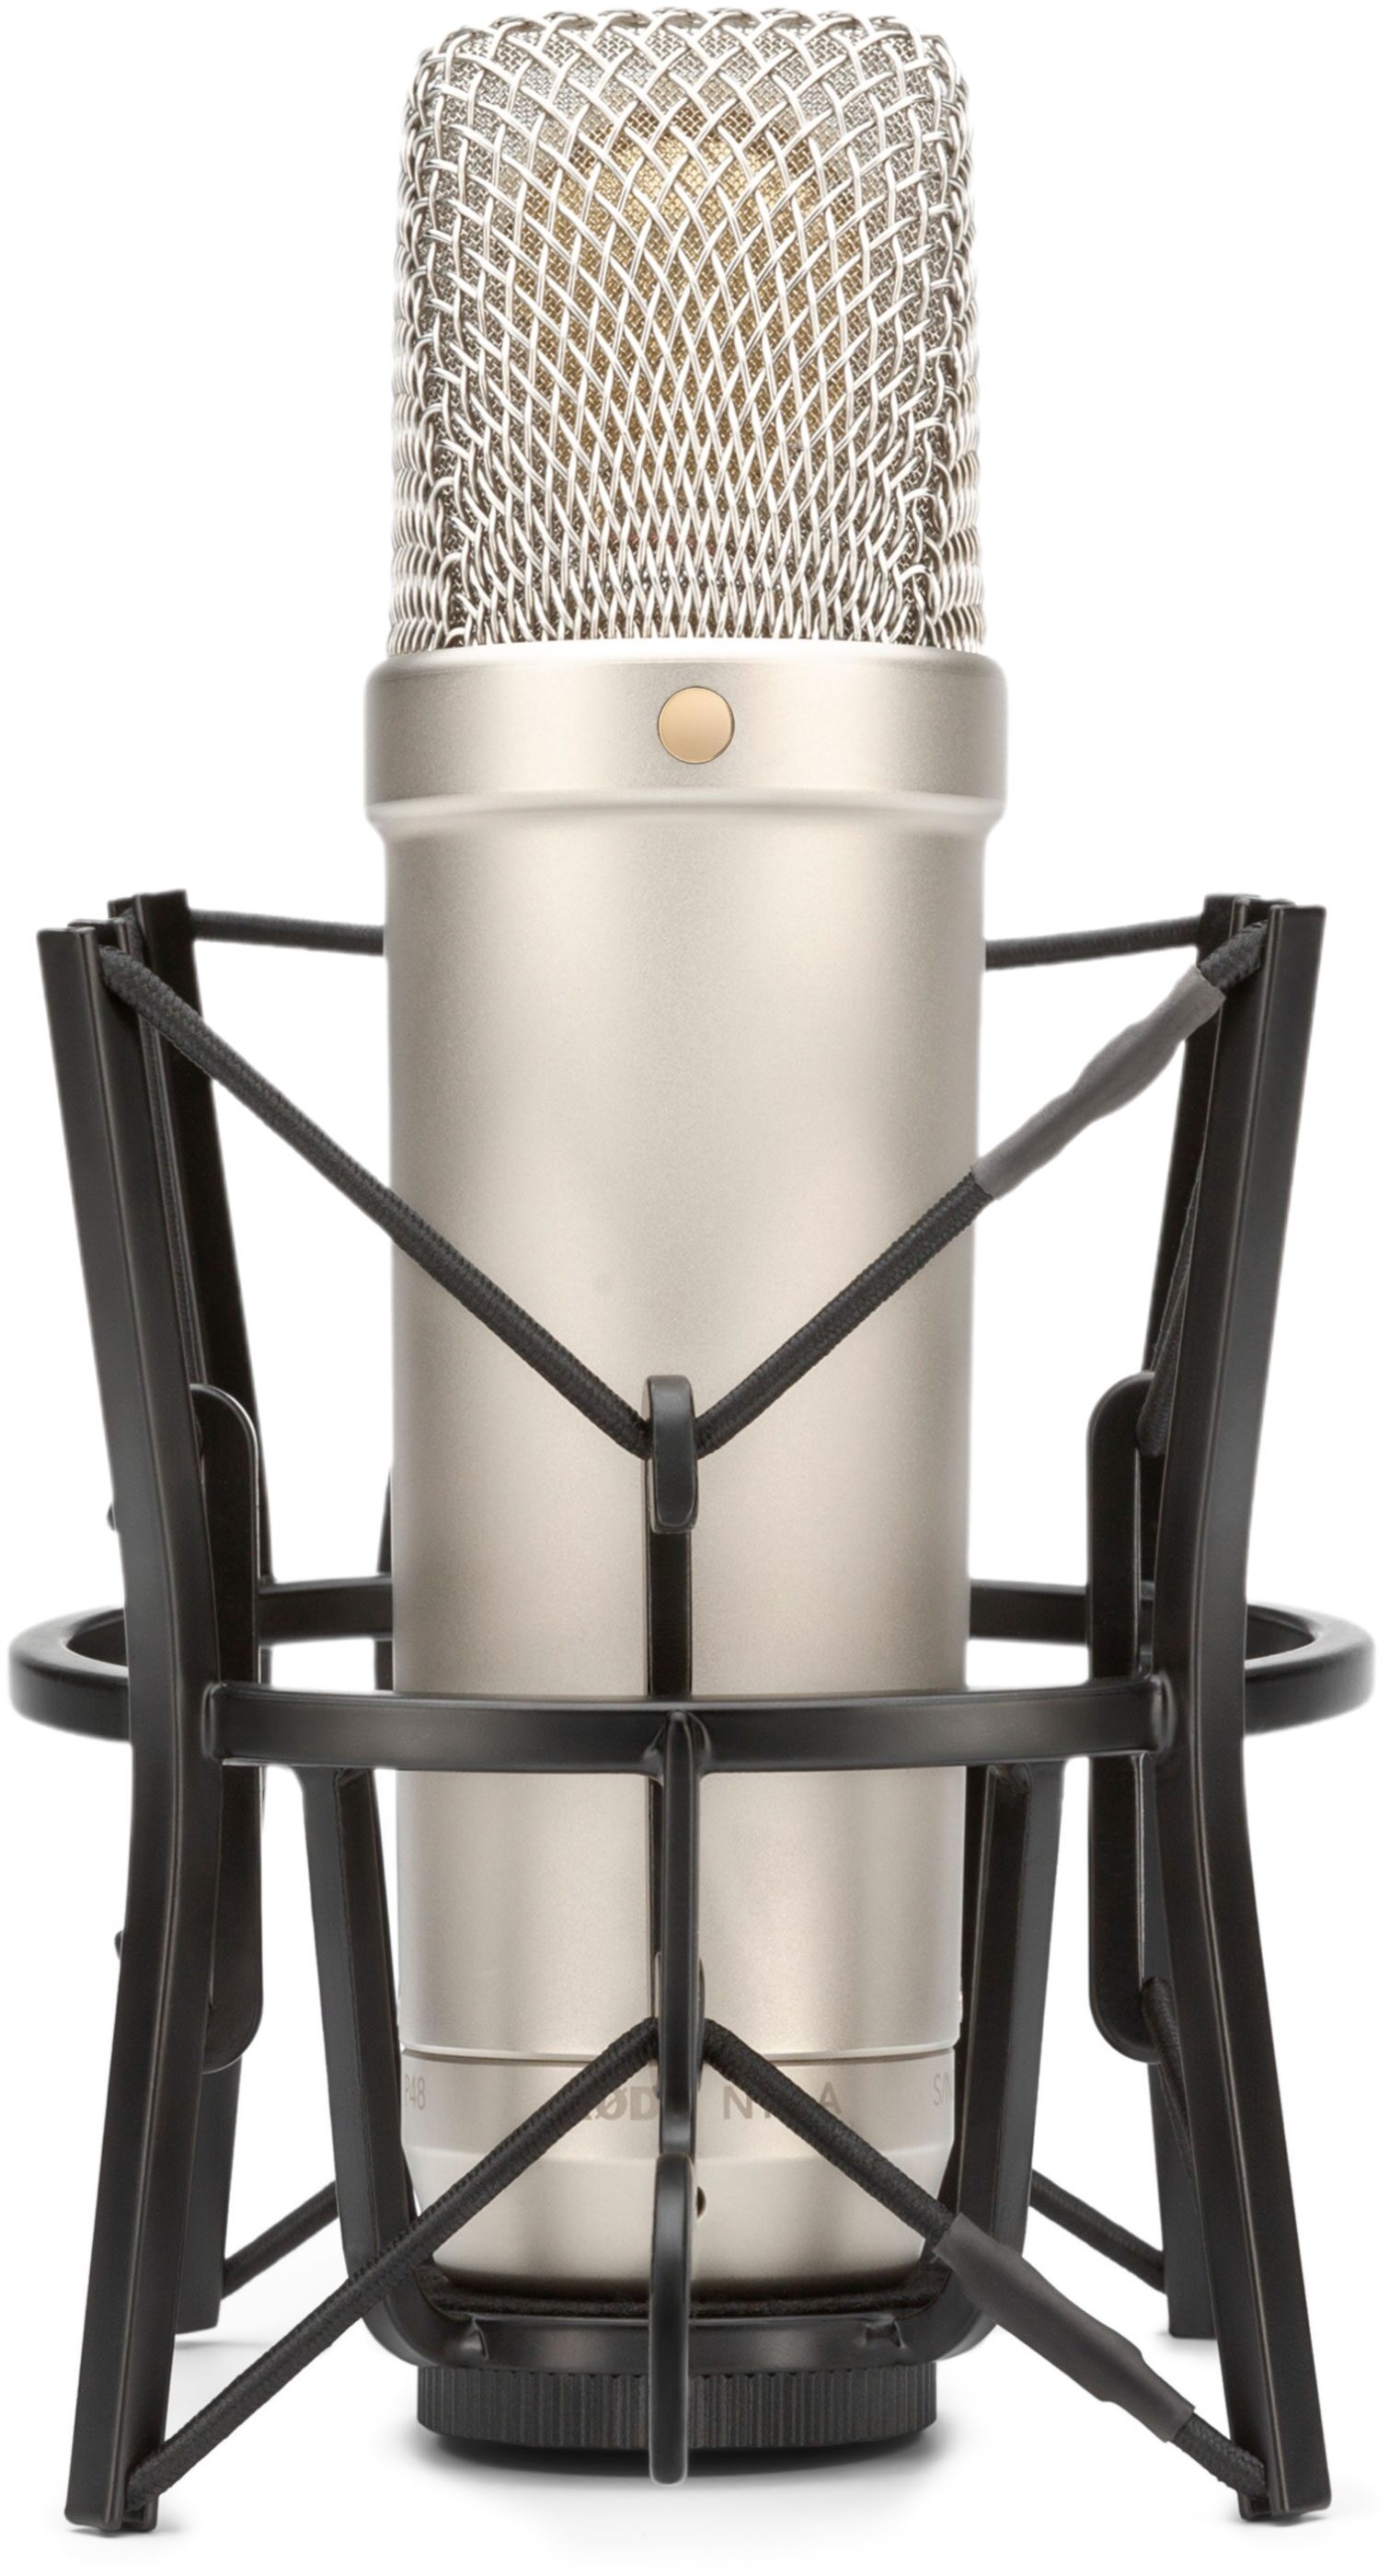 Rode NT1-A Studio Condenser Microphone